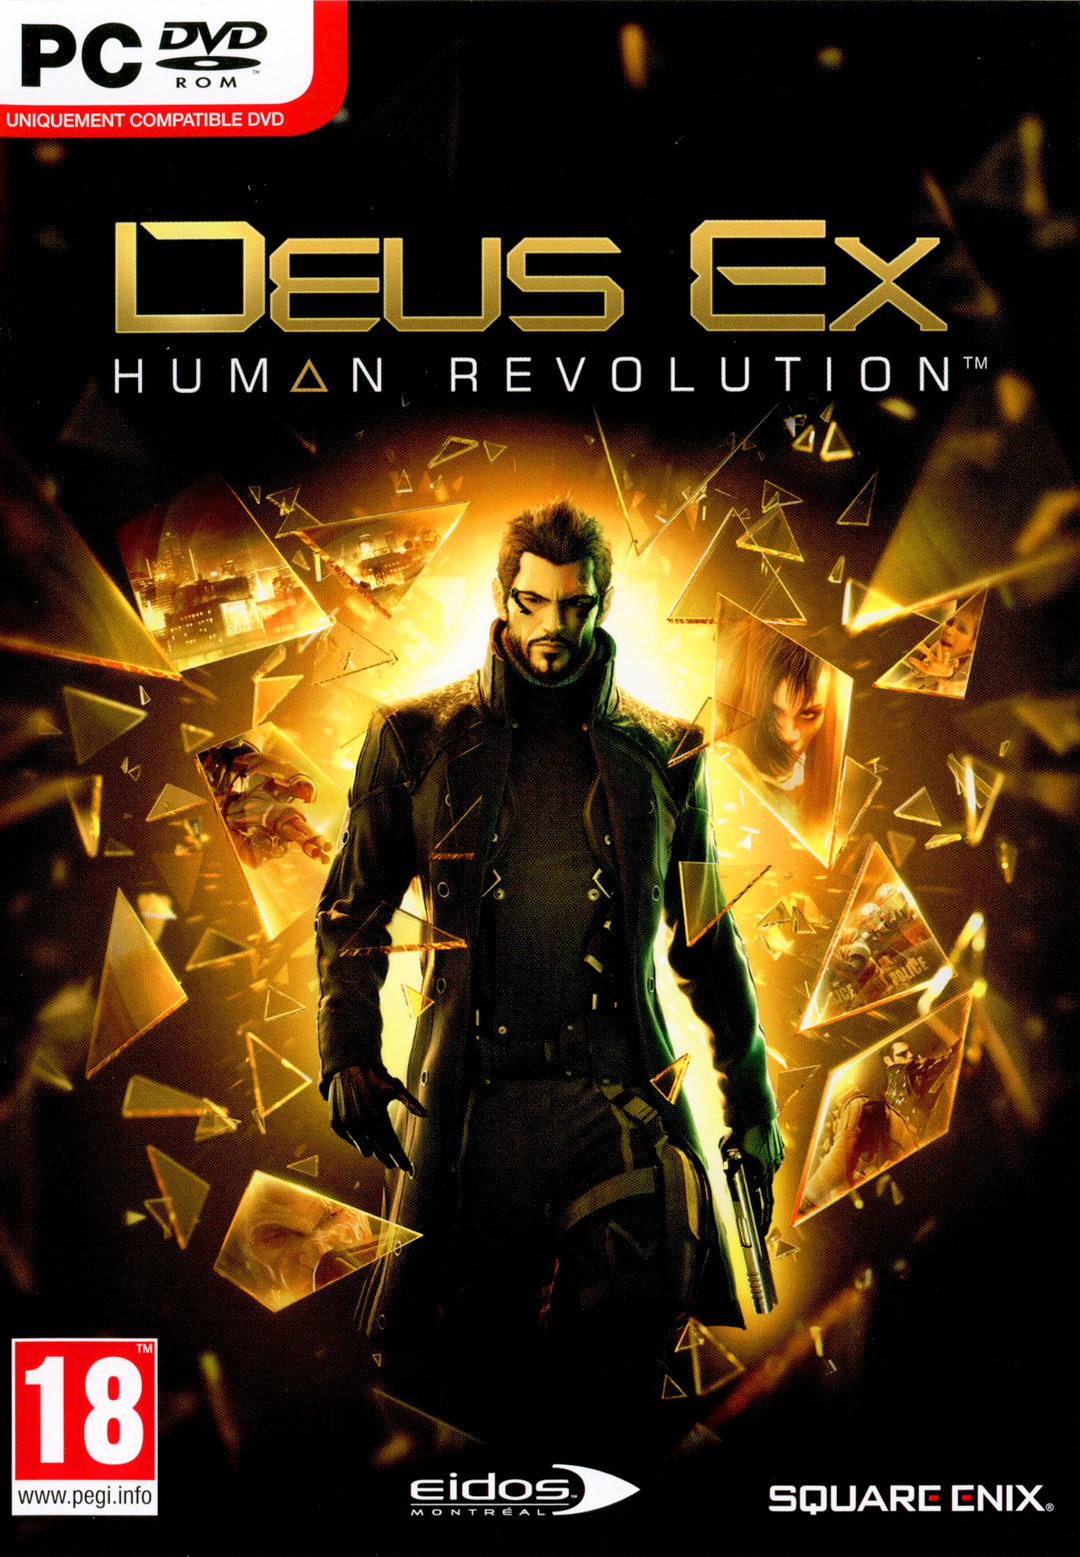 revolution - Deus Ex : Human Revolution + Crack + BONUS + Patch [PC | ISO ] [FRENCH](Exclue) |FS] [US] [WU] Jaquette-deus-ex-human-revolution-pc-cover-avant-g-1314277745